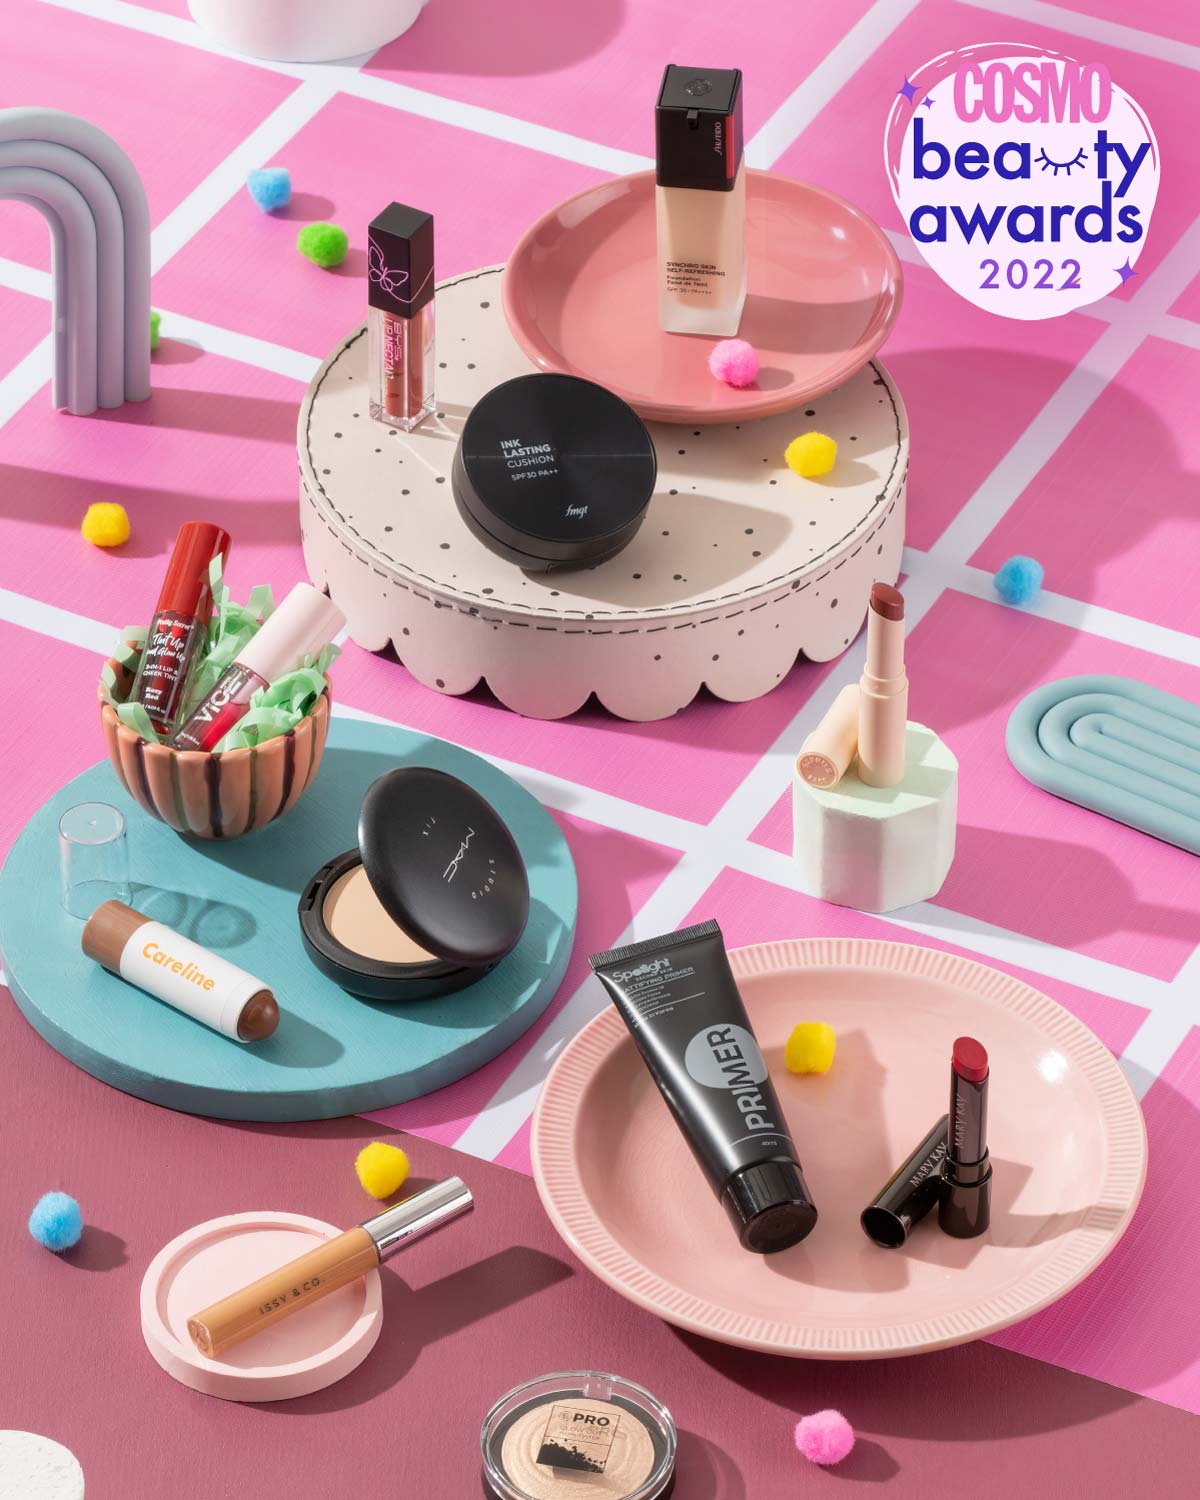 Cosmopolitan Beauty Awards 2022 Winners, makeup